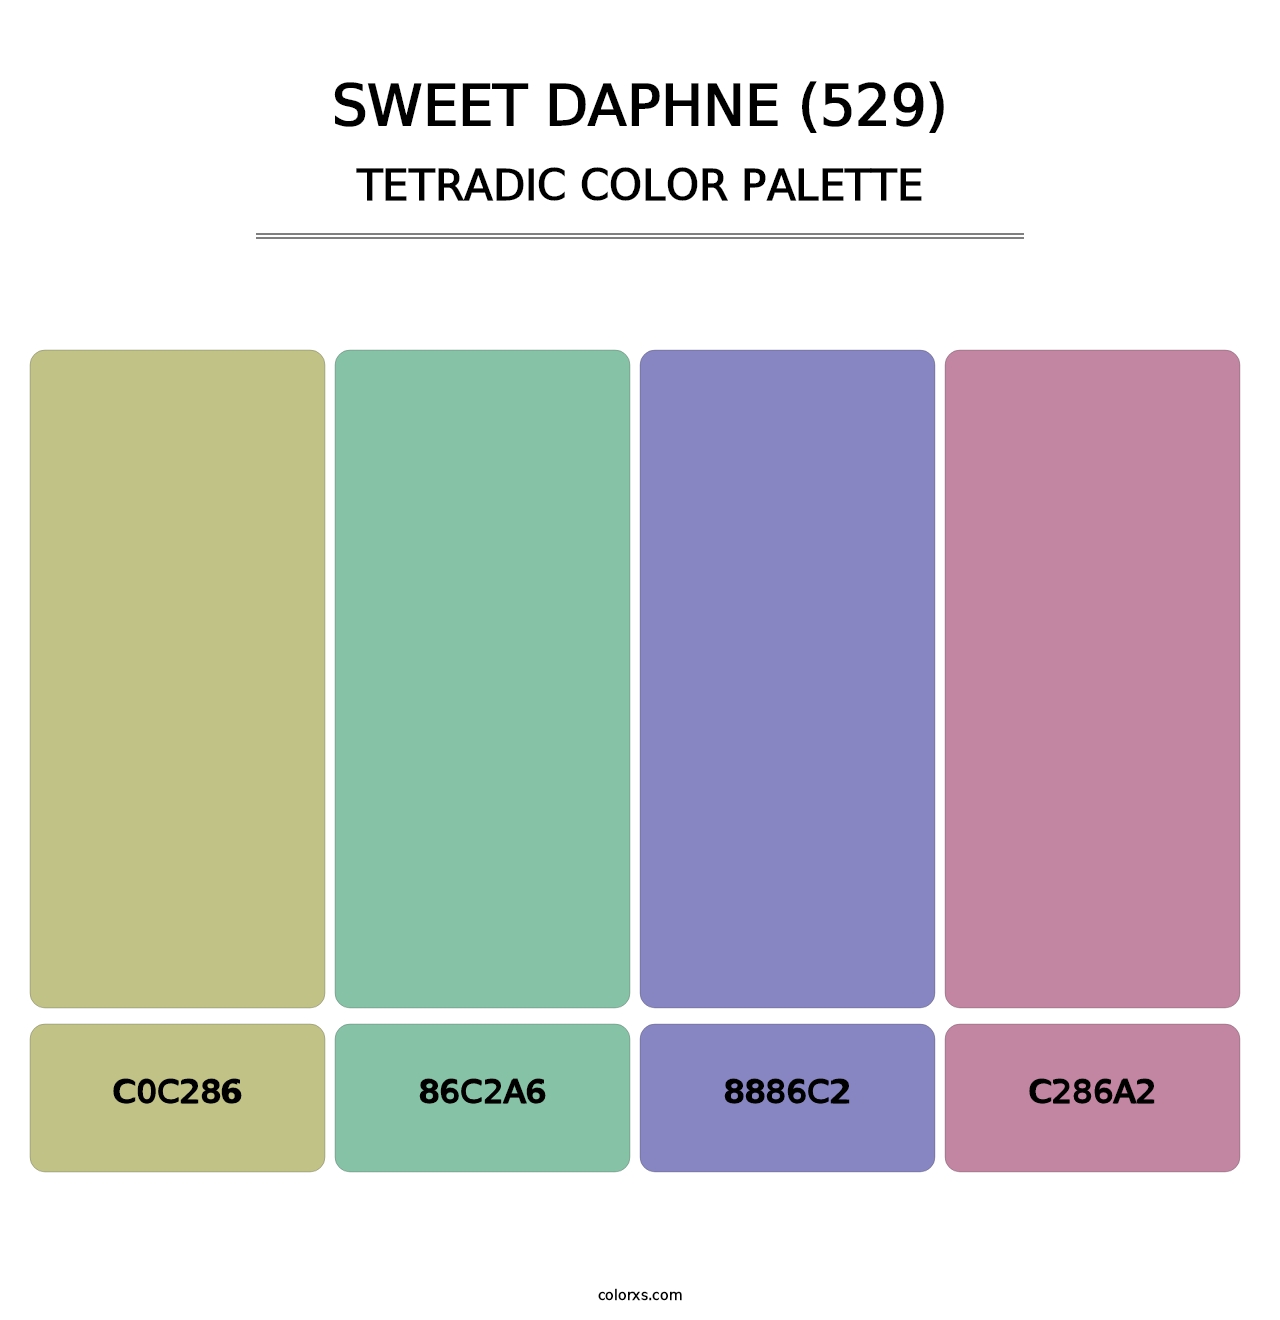 Sweet Daphne (529) - Tetradic Color Palette